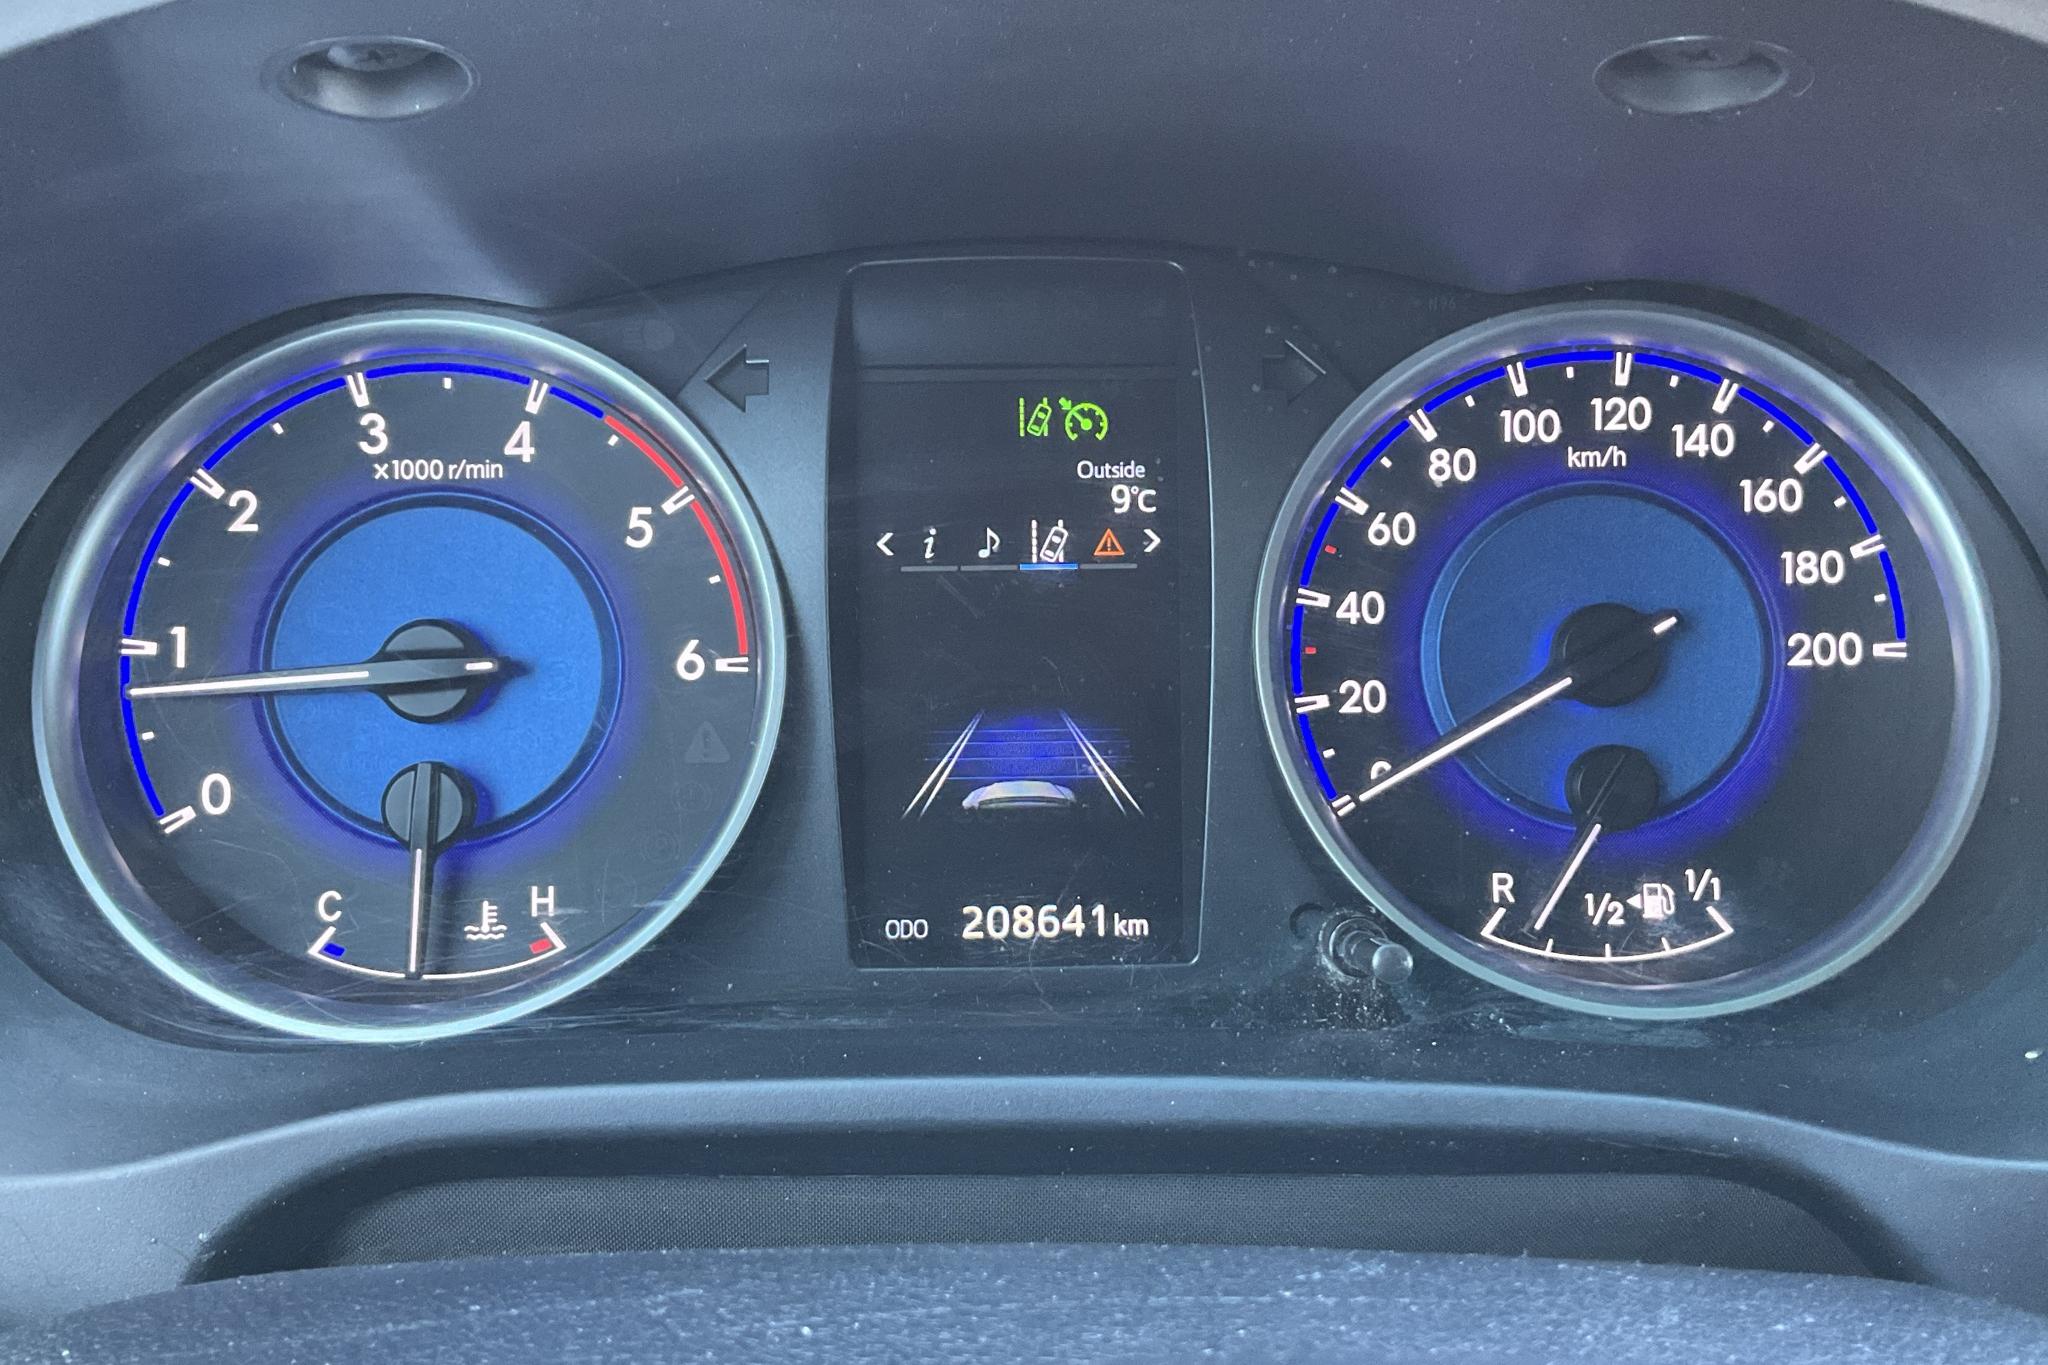 Toyota Hilux 2.4 D 4WD (150hk) - 208 640 km - Manual - white - 2018